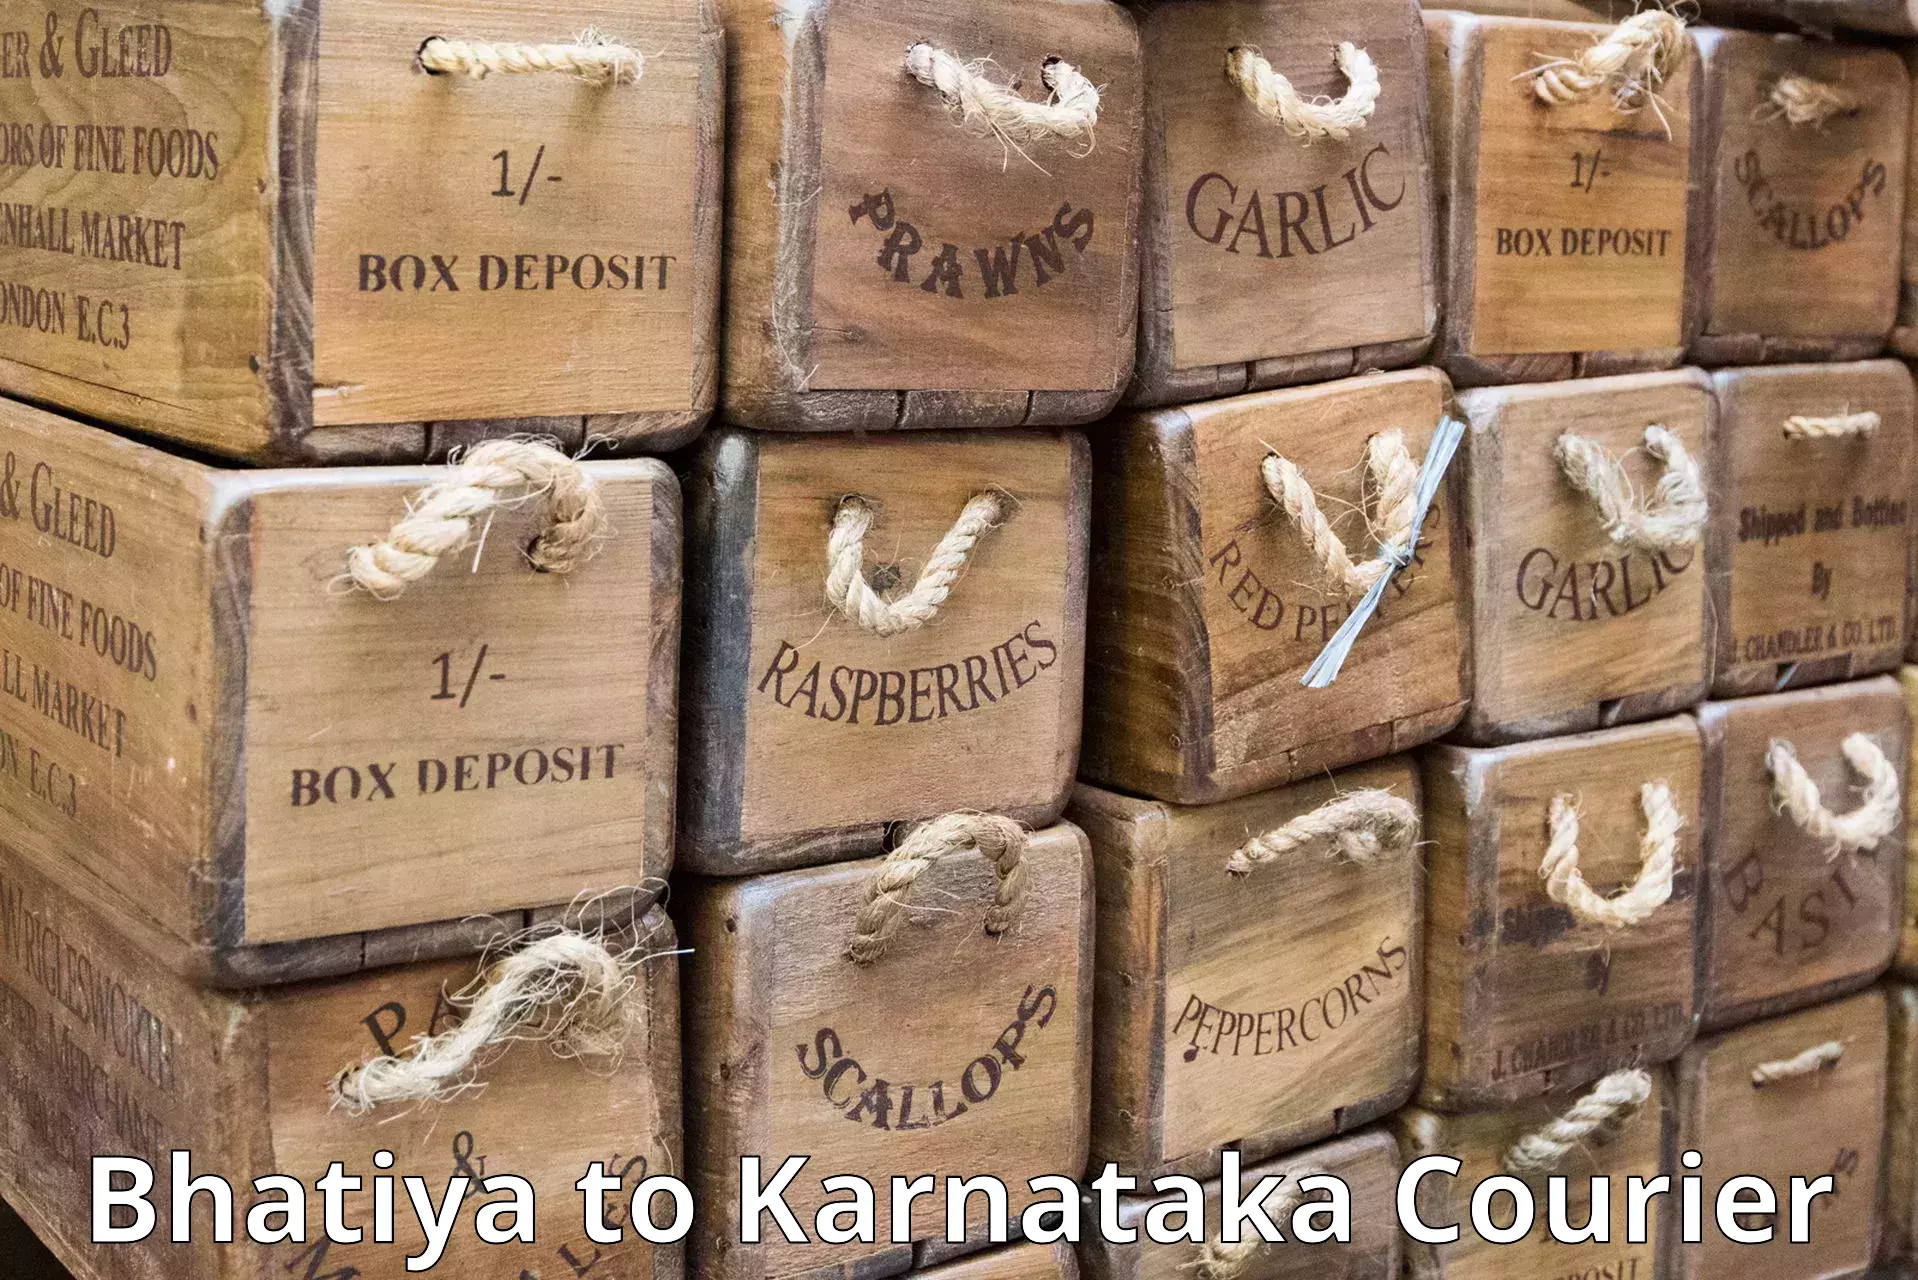 Full-service courier options Bhatiya to Karnataka